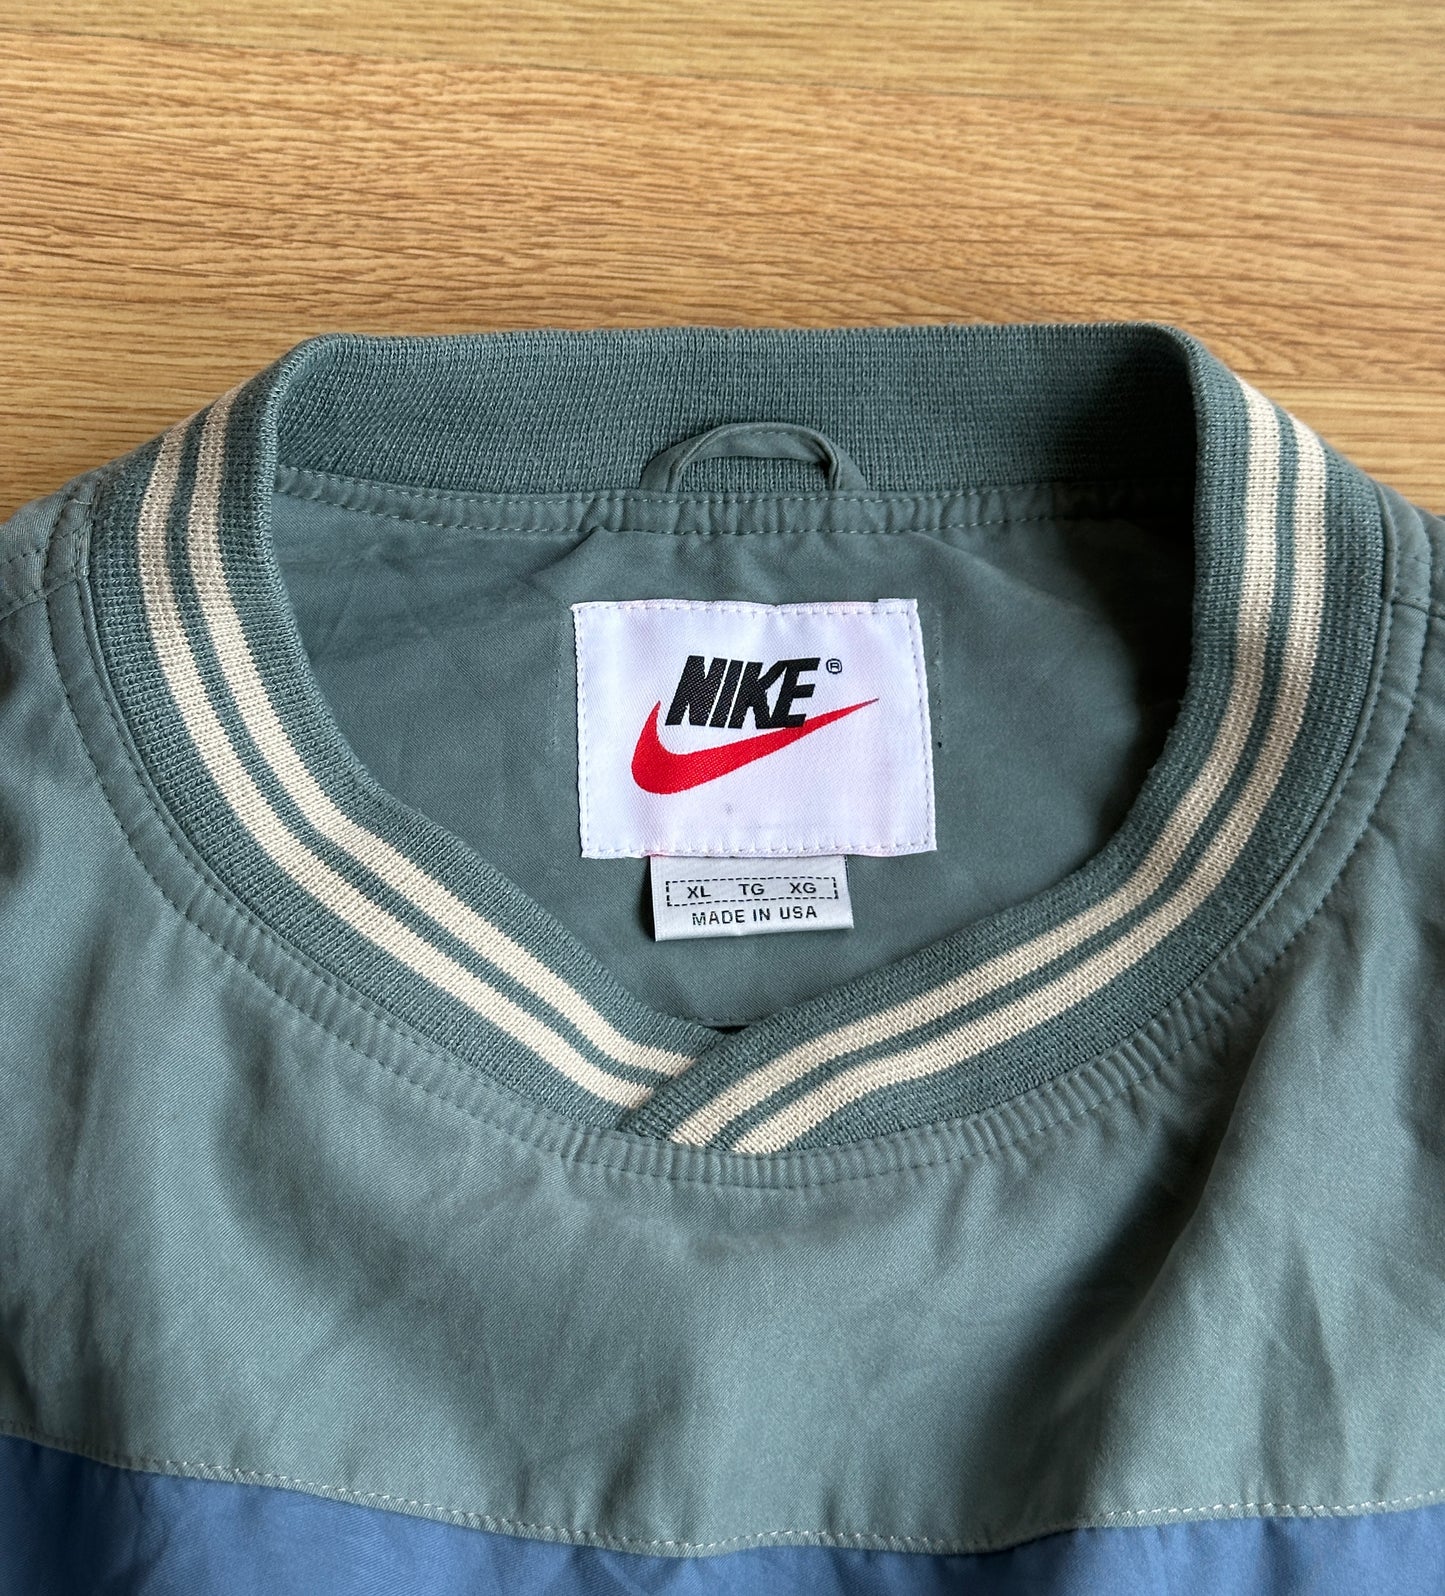 Vintage Nike pullover